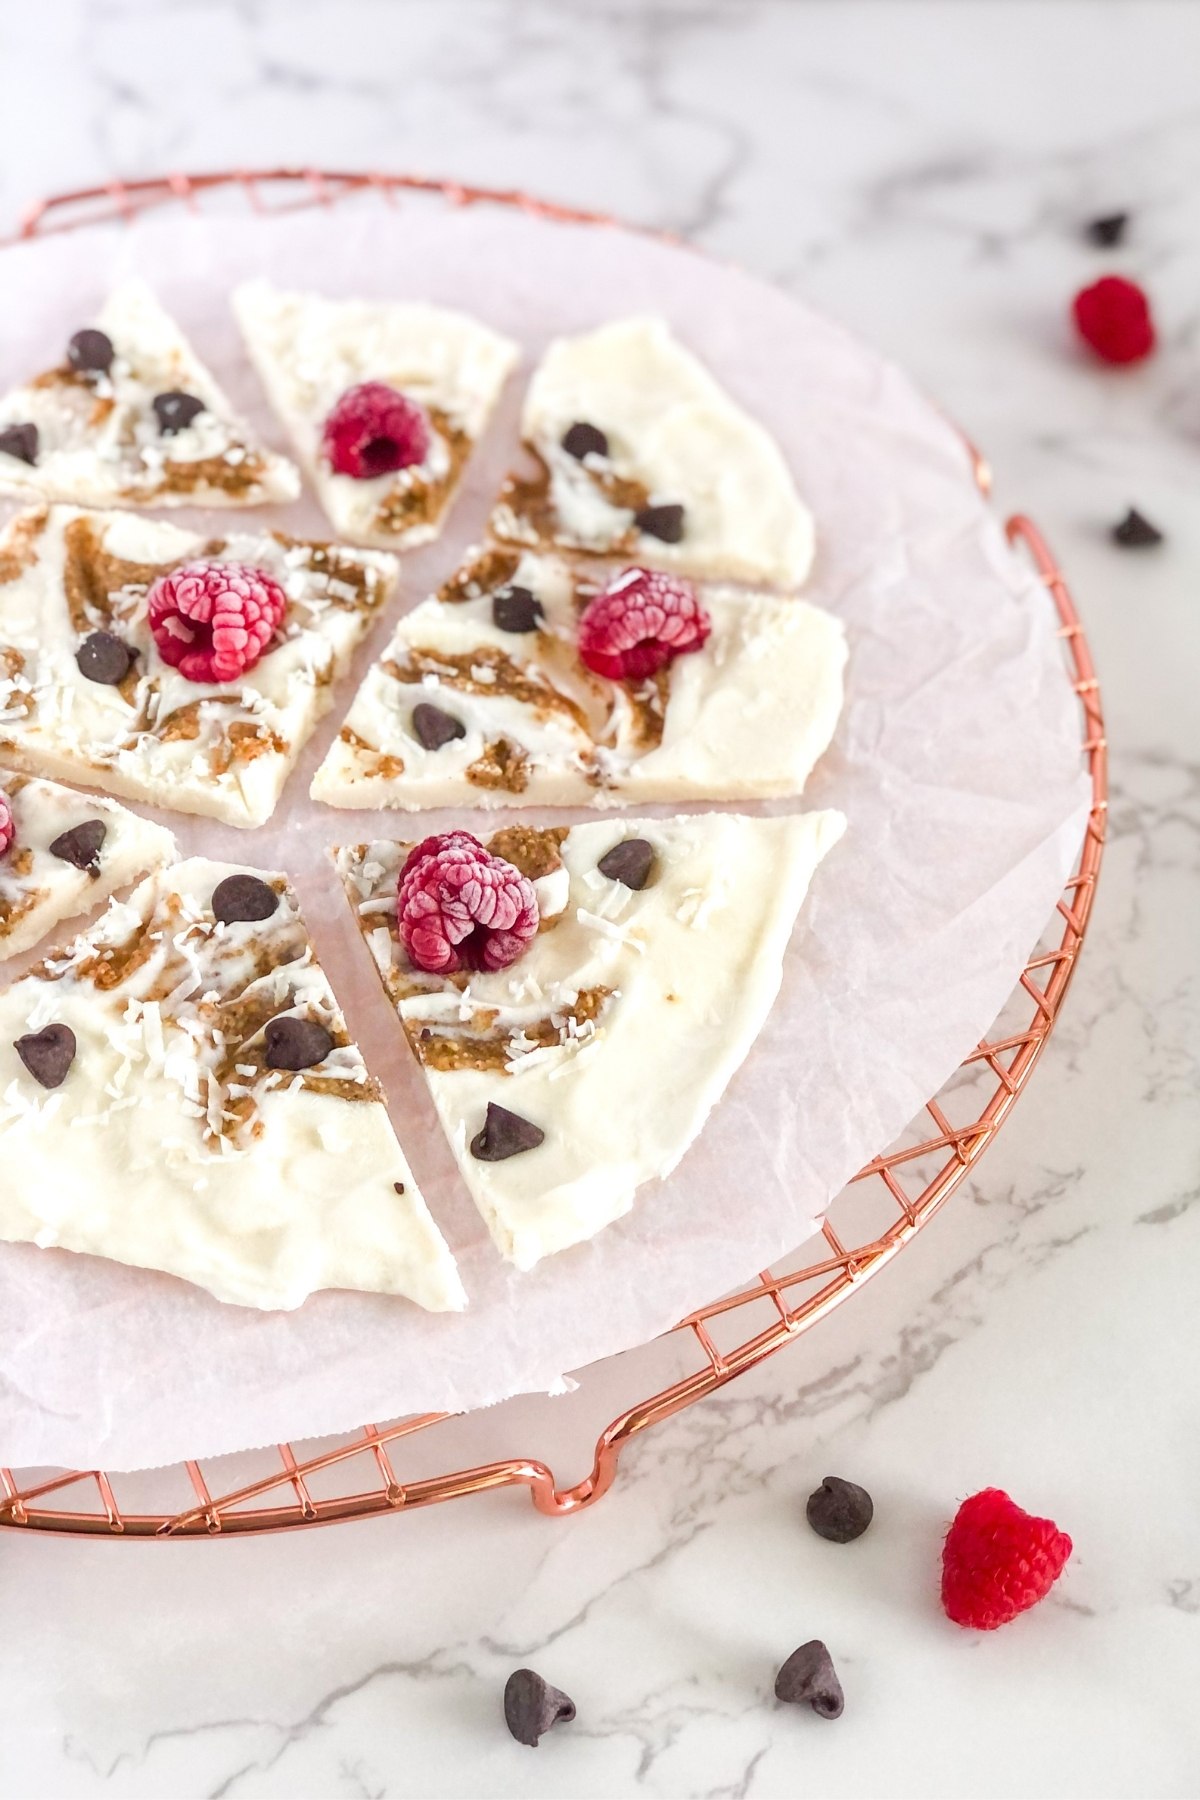 almond butter yogurt bark with raspberries and chocolate chips